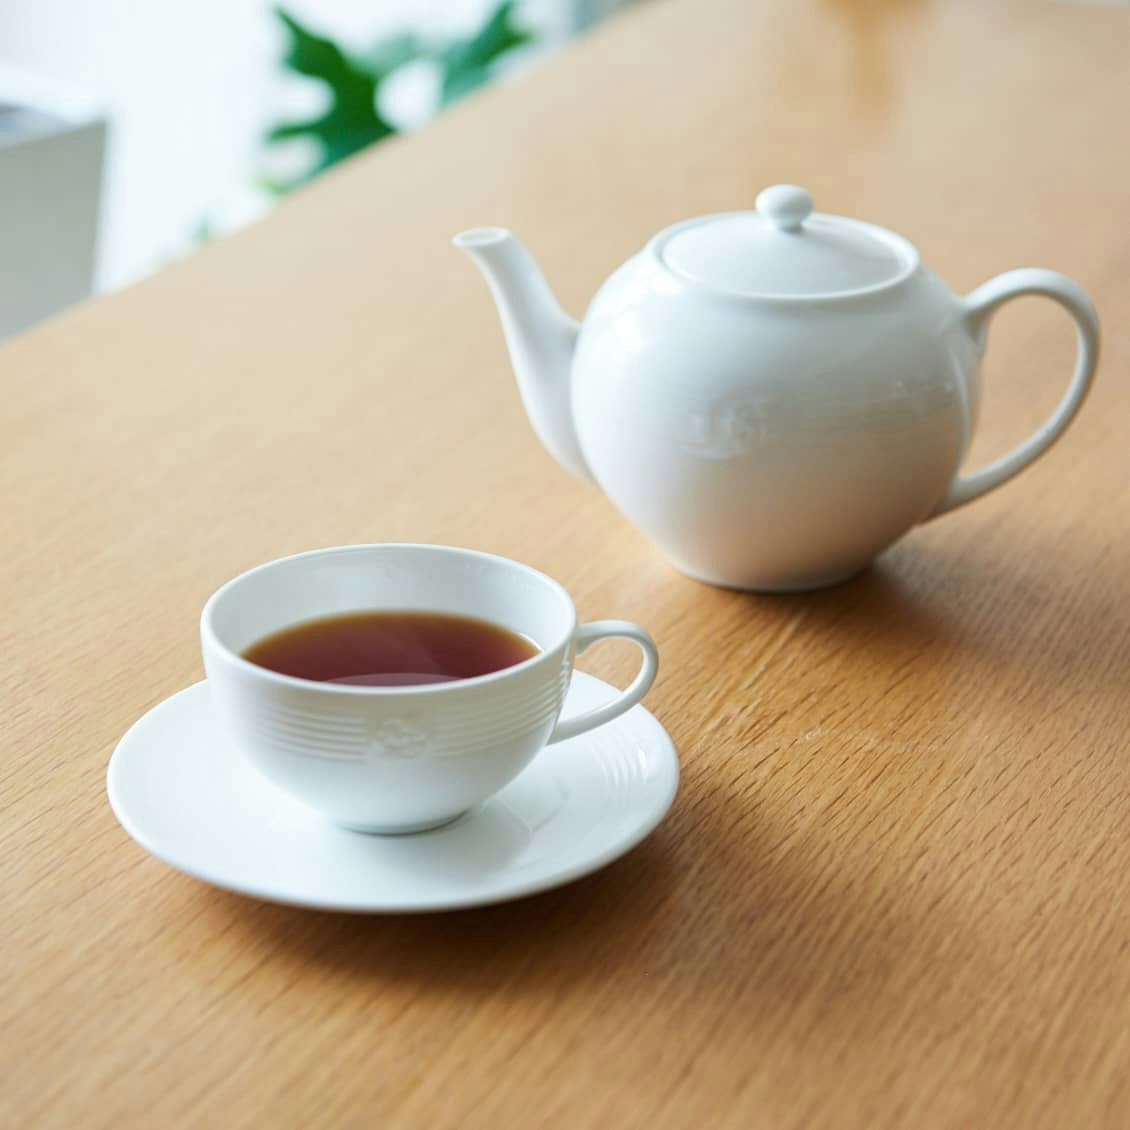 Brand Note 自宅で紅茶はむずかしい Afternoon Tea Tearoom直伝 おいしさを引き出すゴールデンルール 北欧 暮らしの道具店